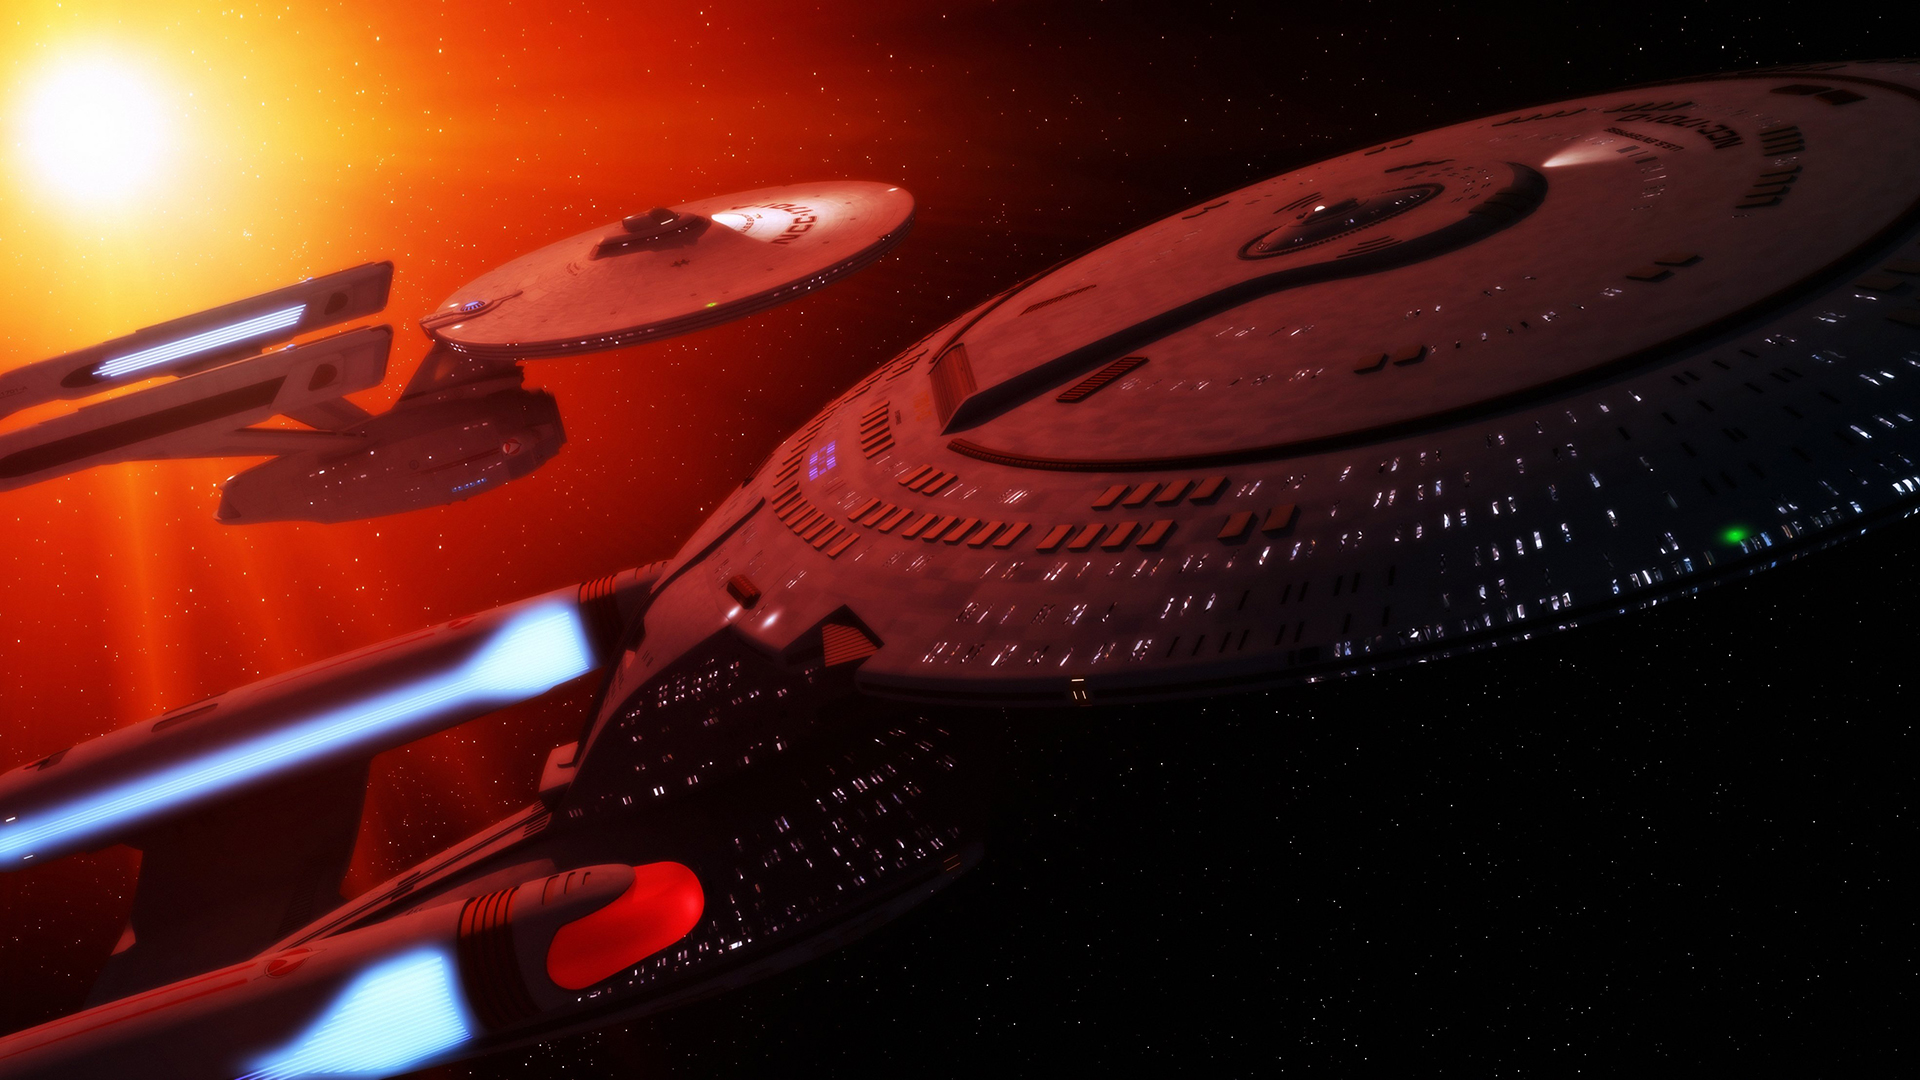 Star Trek Starship Enterprise Spaceship Starlight Space Movies Sci Fi